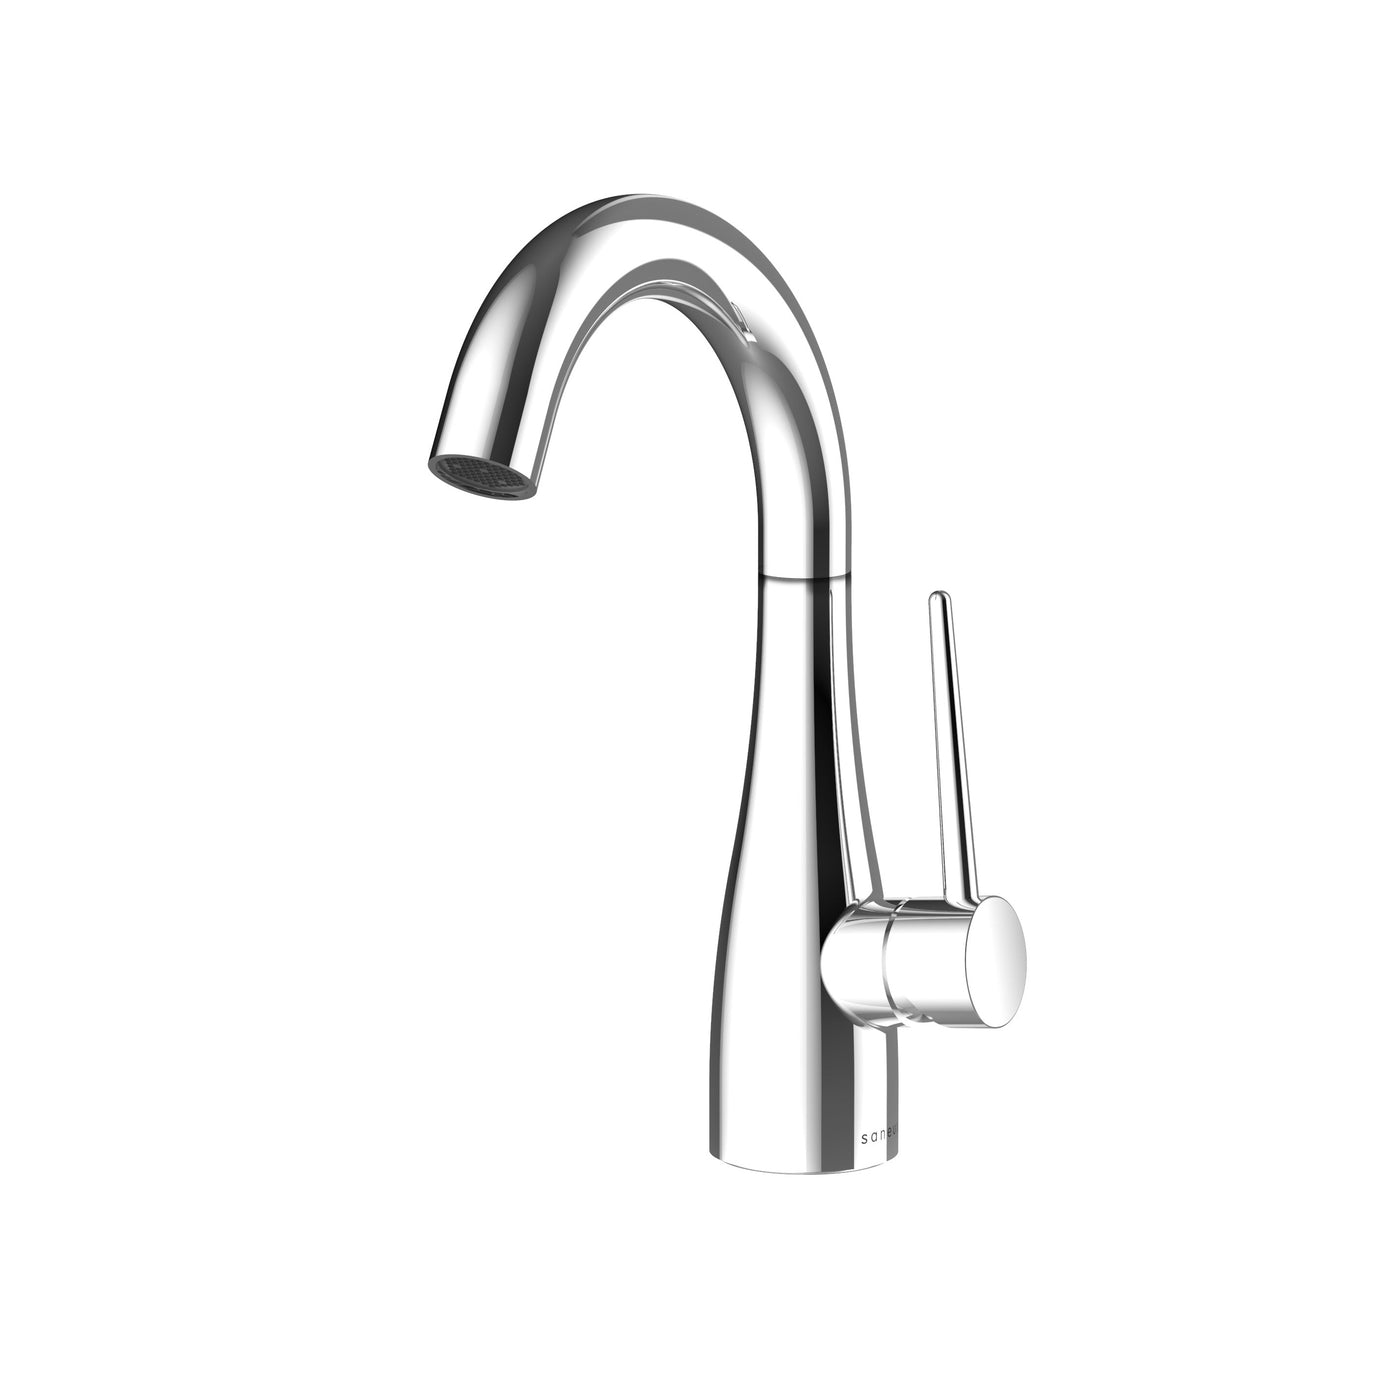 Chrome, high rise basin mixer tap with swivel spout, Eden